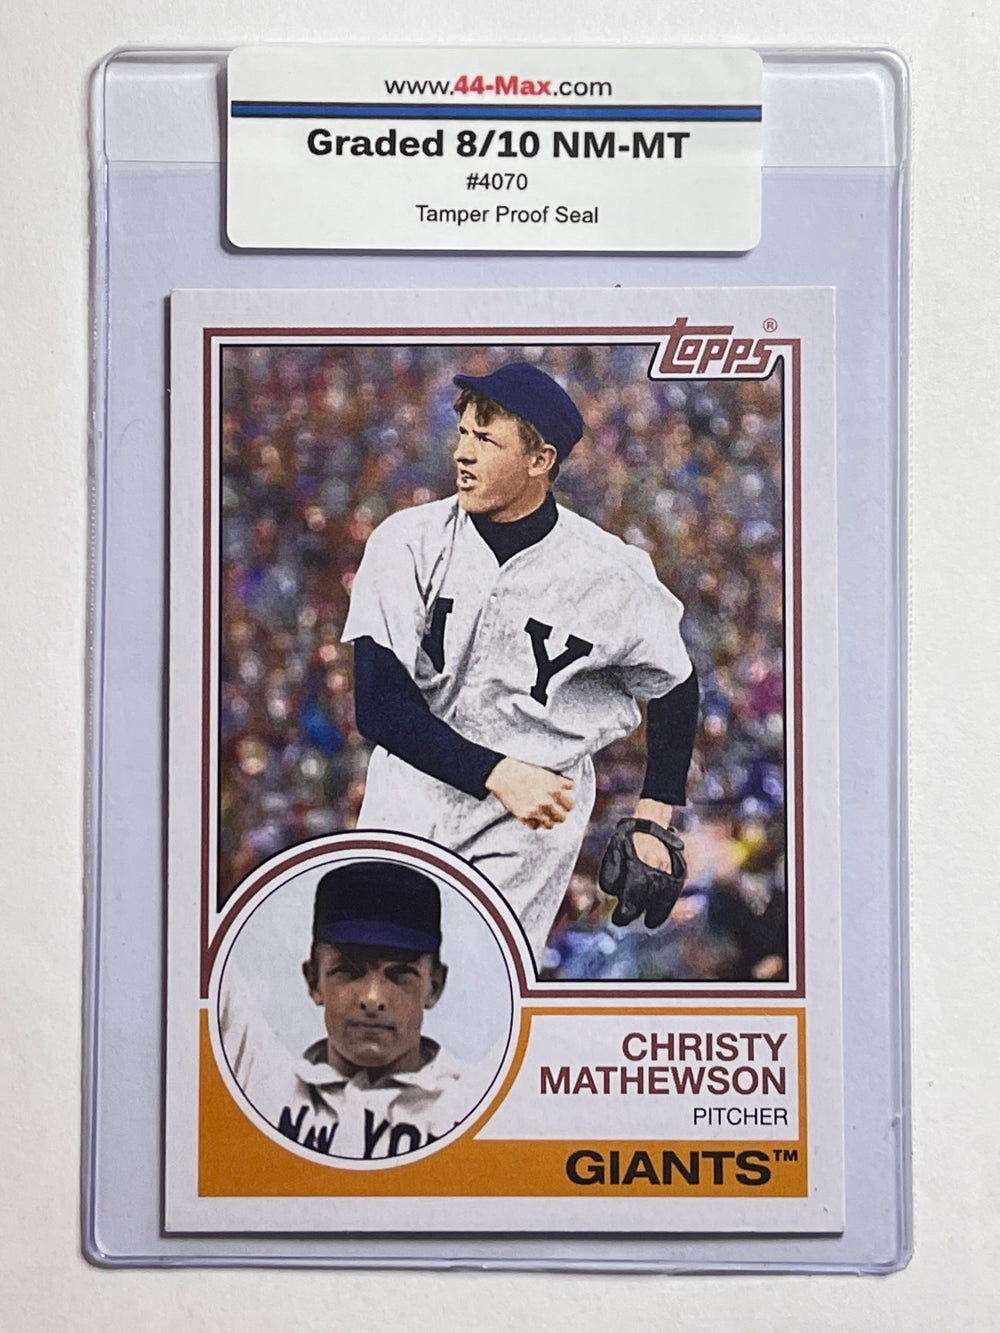 Christy Mathewson 2021 Topps Baseball Card. 44-Max 8/10 NM-MT #4070